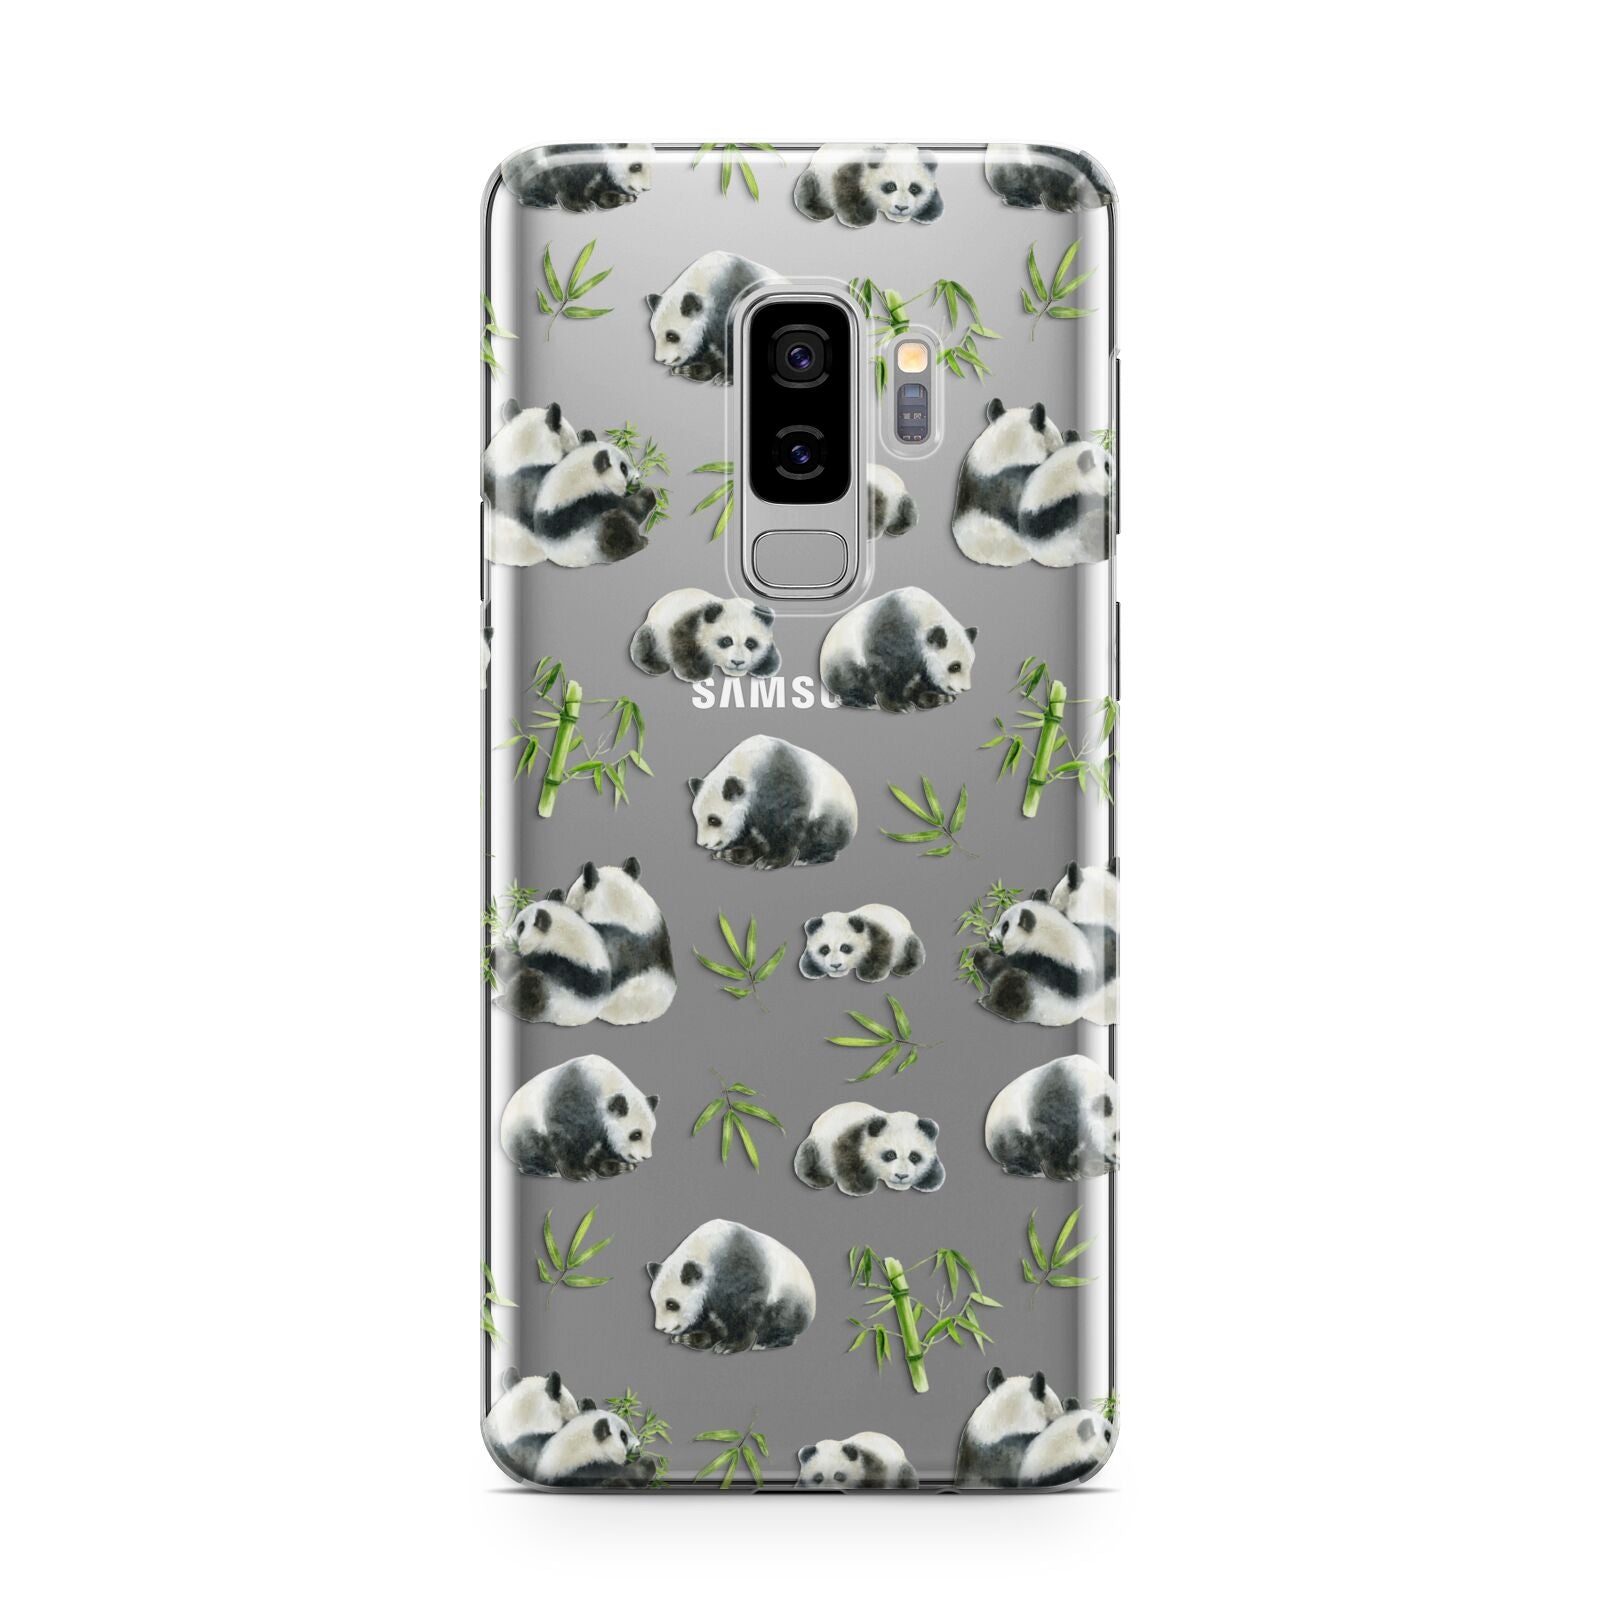 Panda Samsung Galaxy S9 Plus Case on Silver phone